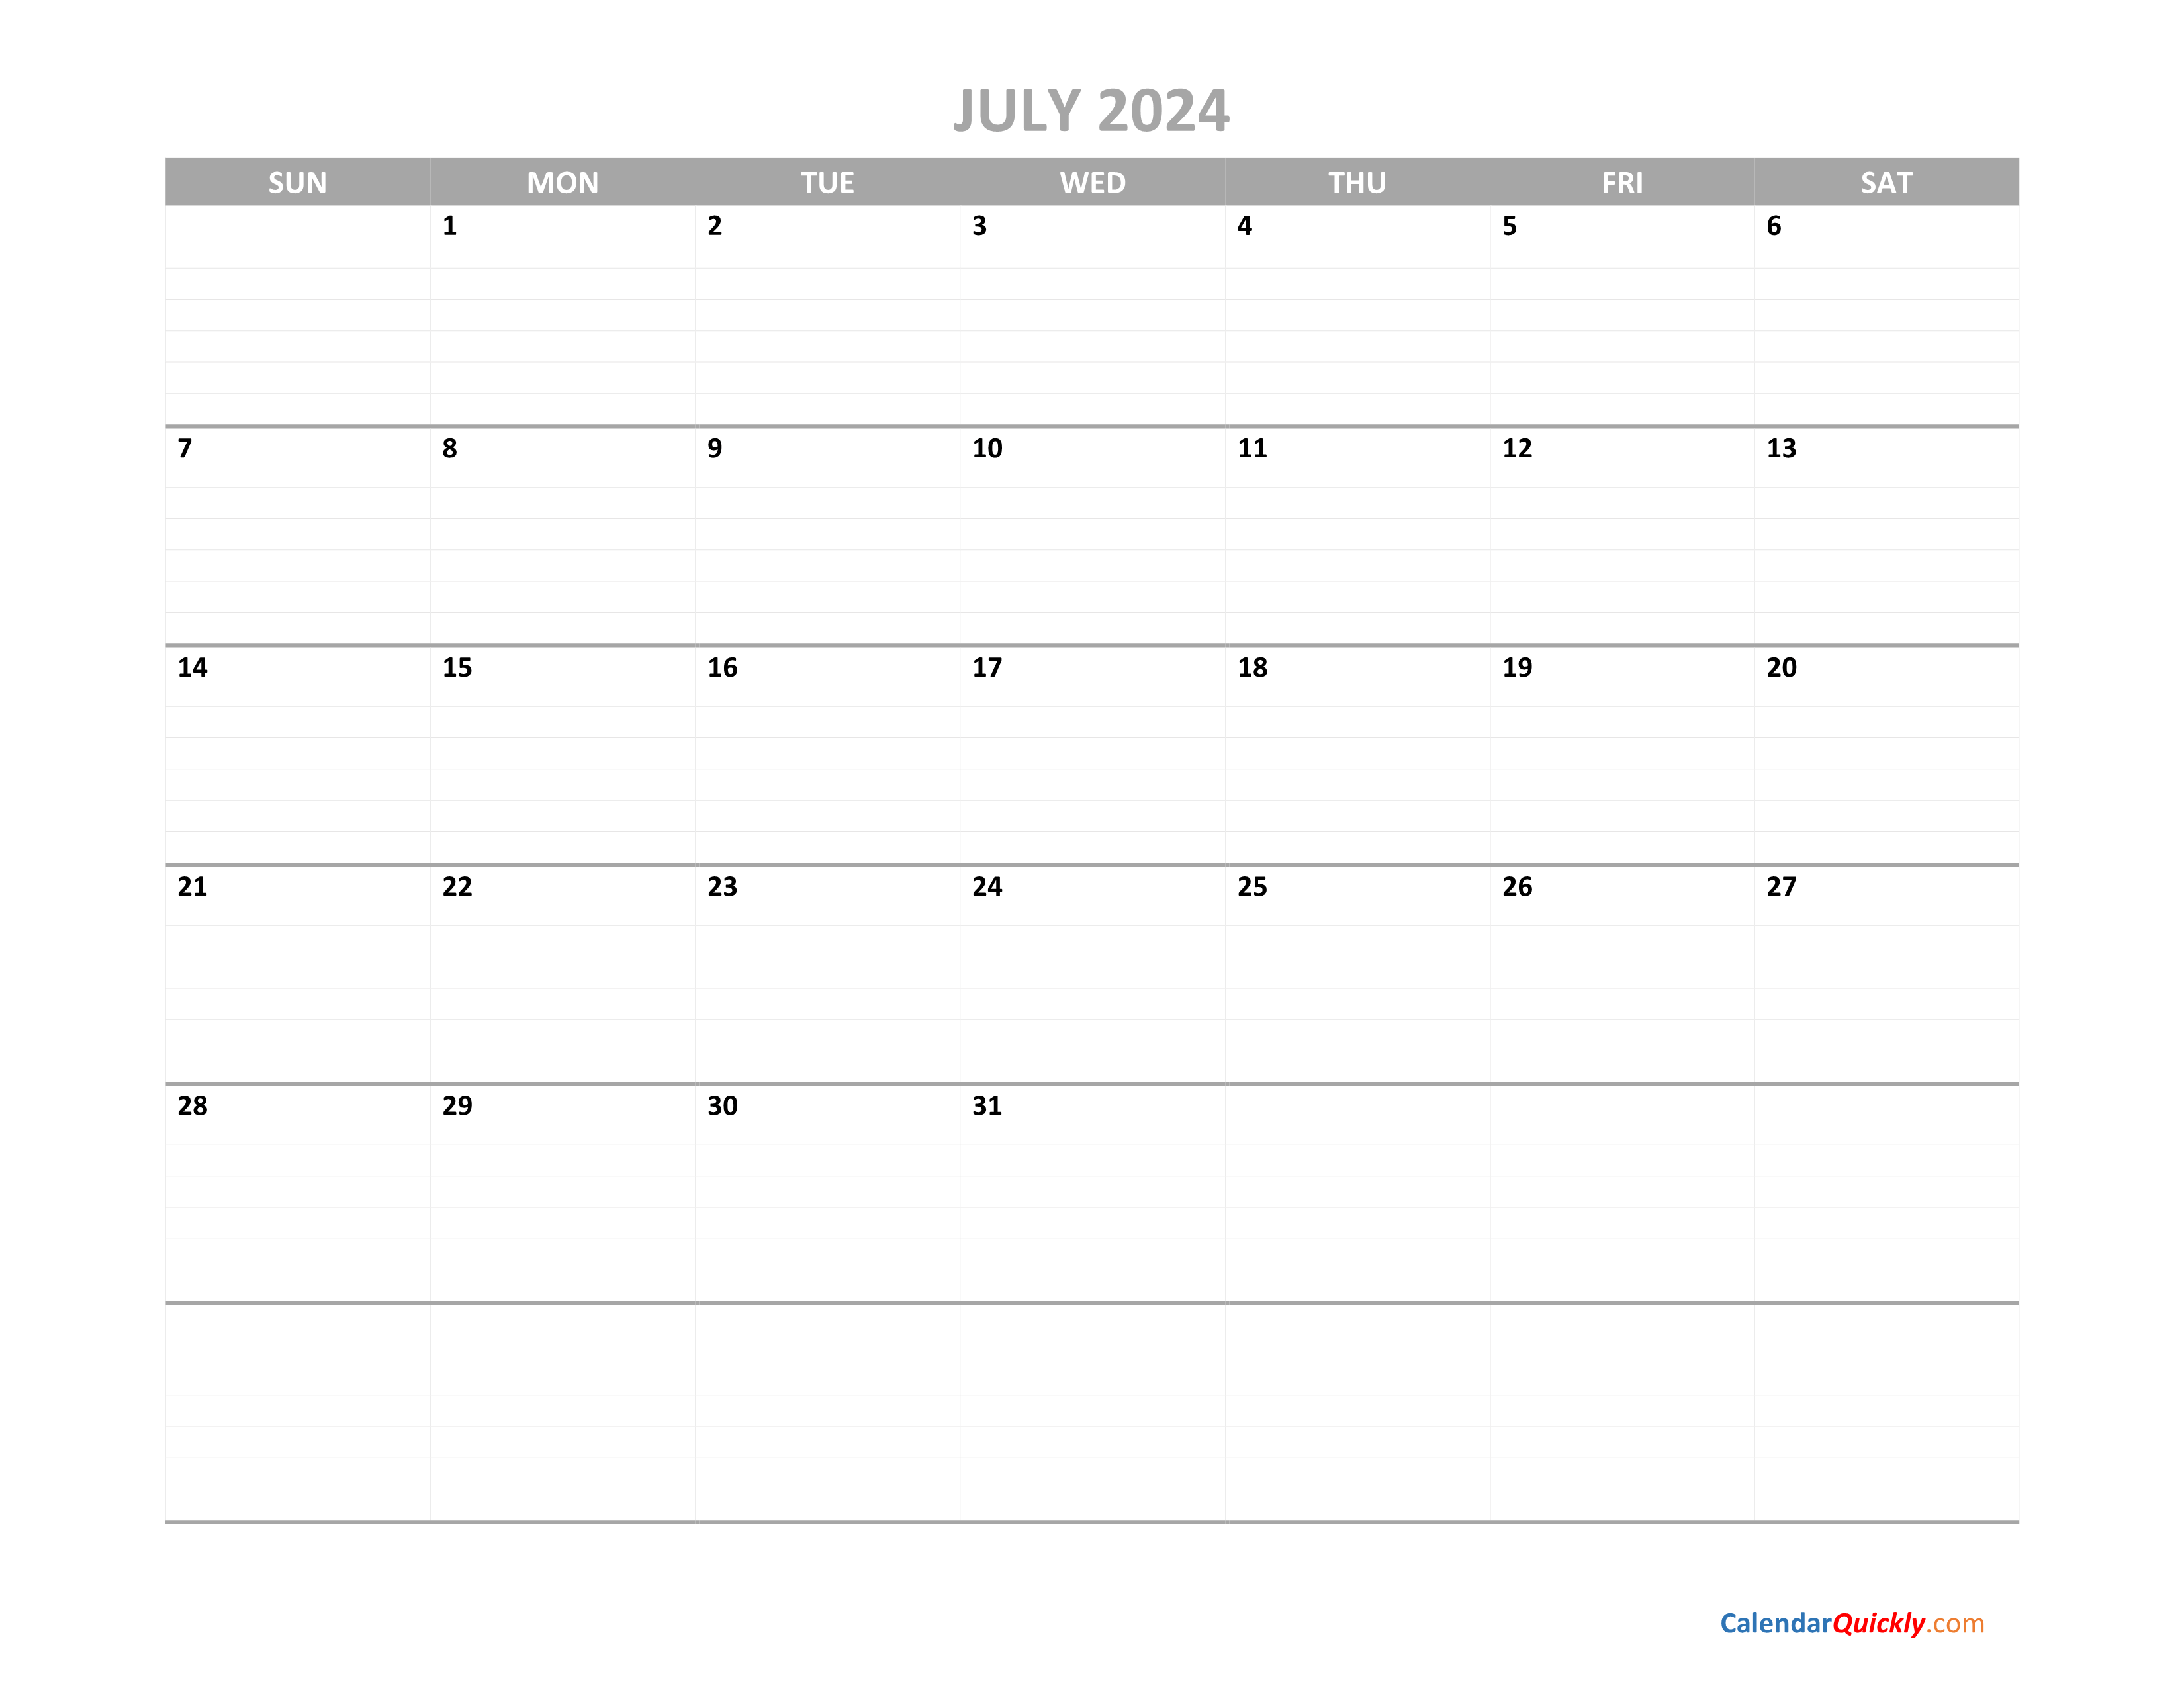 July Calendar 2024 Printable Calendar Quickly